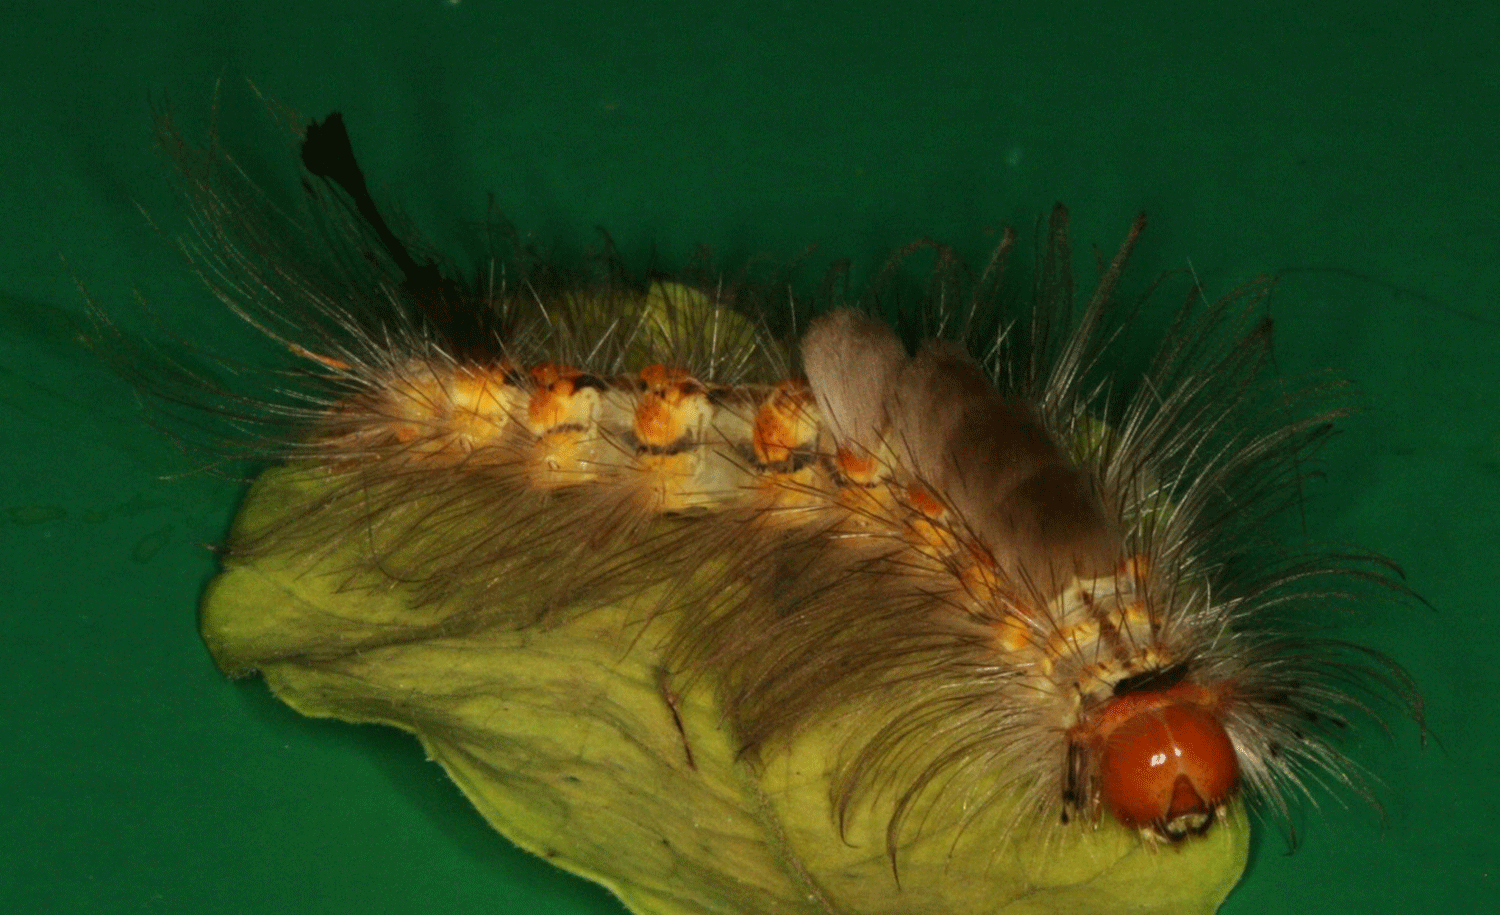 Really hairy caterpillar